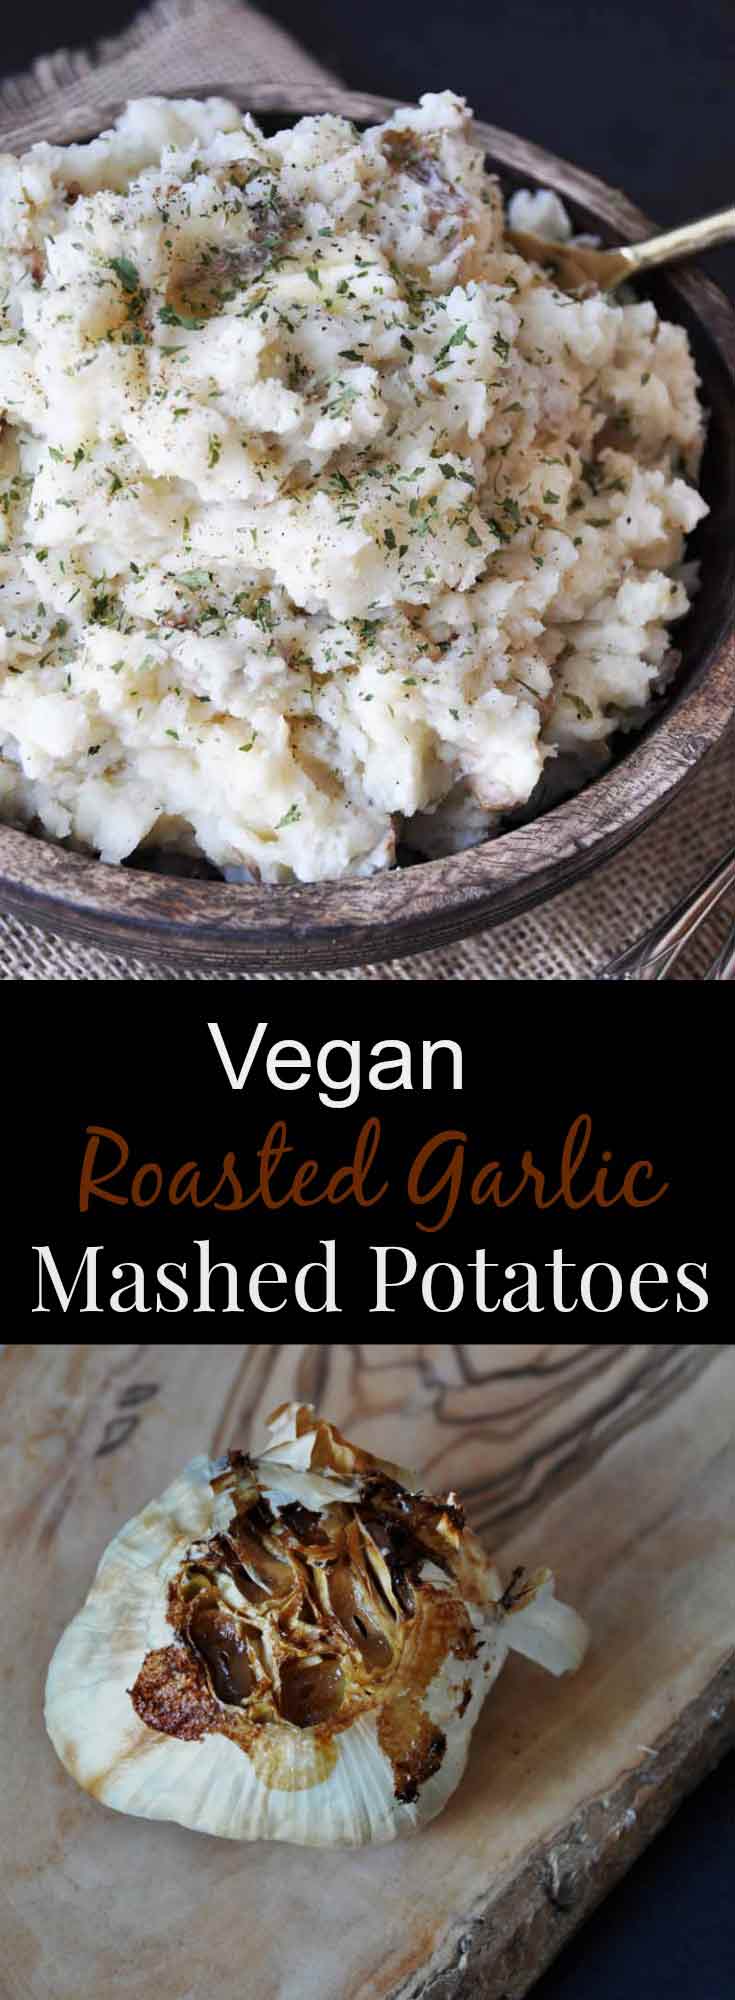 Dairy-free vegan roasted garlic mashed potatoes! A true crowd pleaser! www.veganosity.com